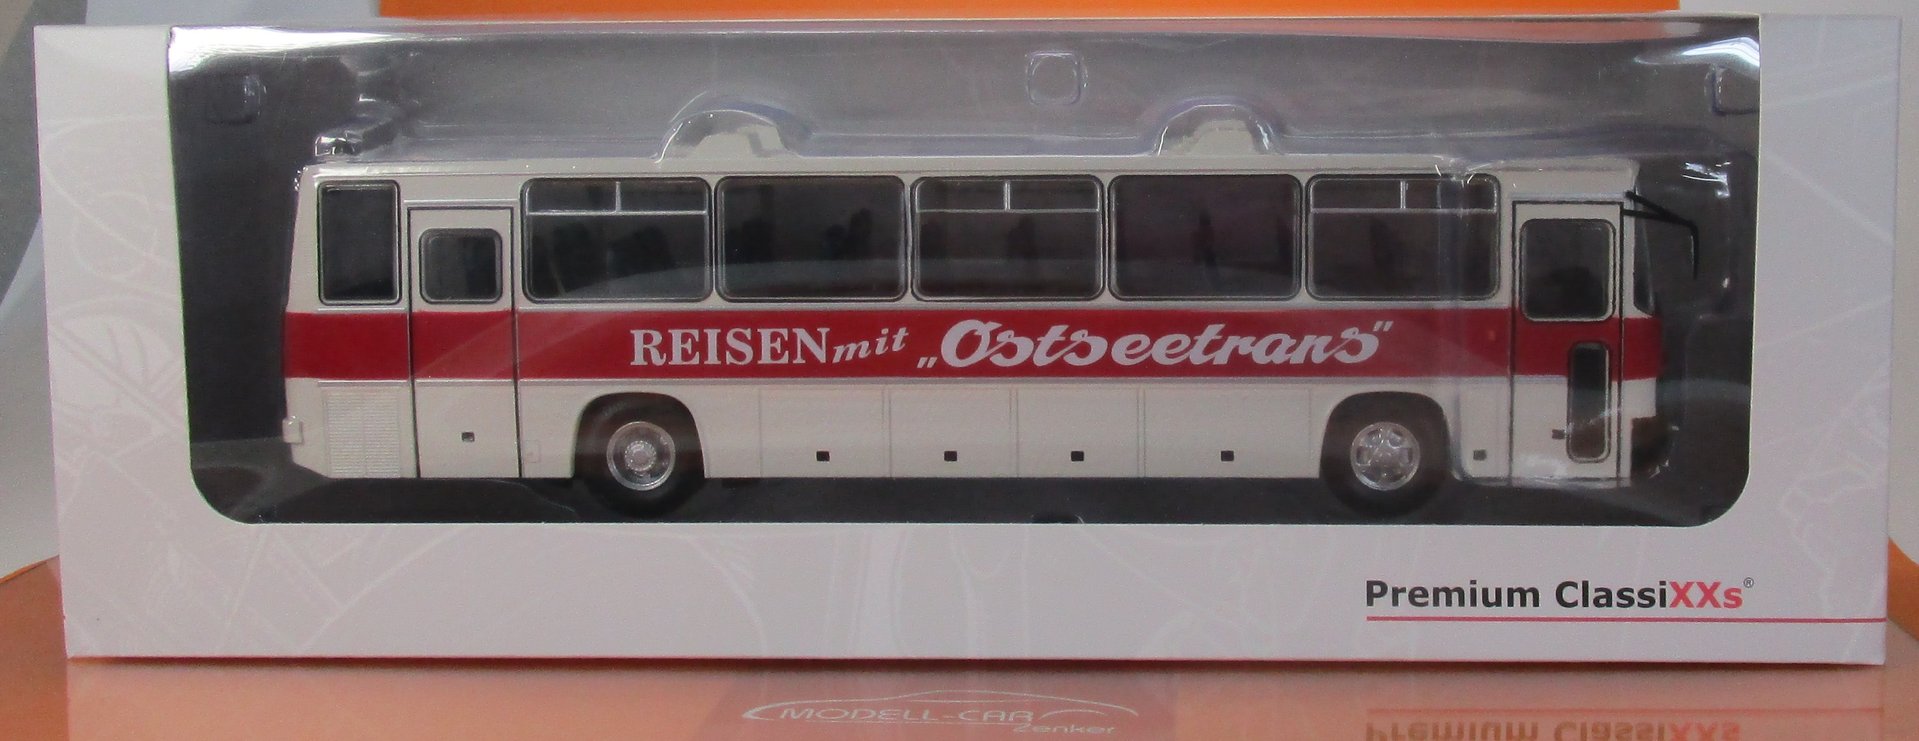 1:43 Ikarus 250.59 Reisen mit Ostseetrans Hungary Premium PCL47124 DDR Germany